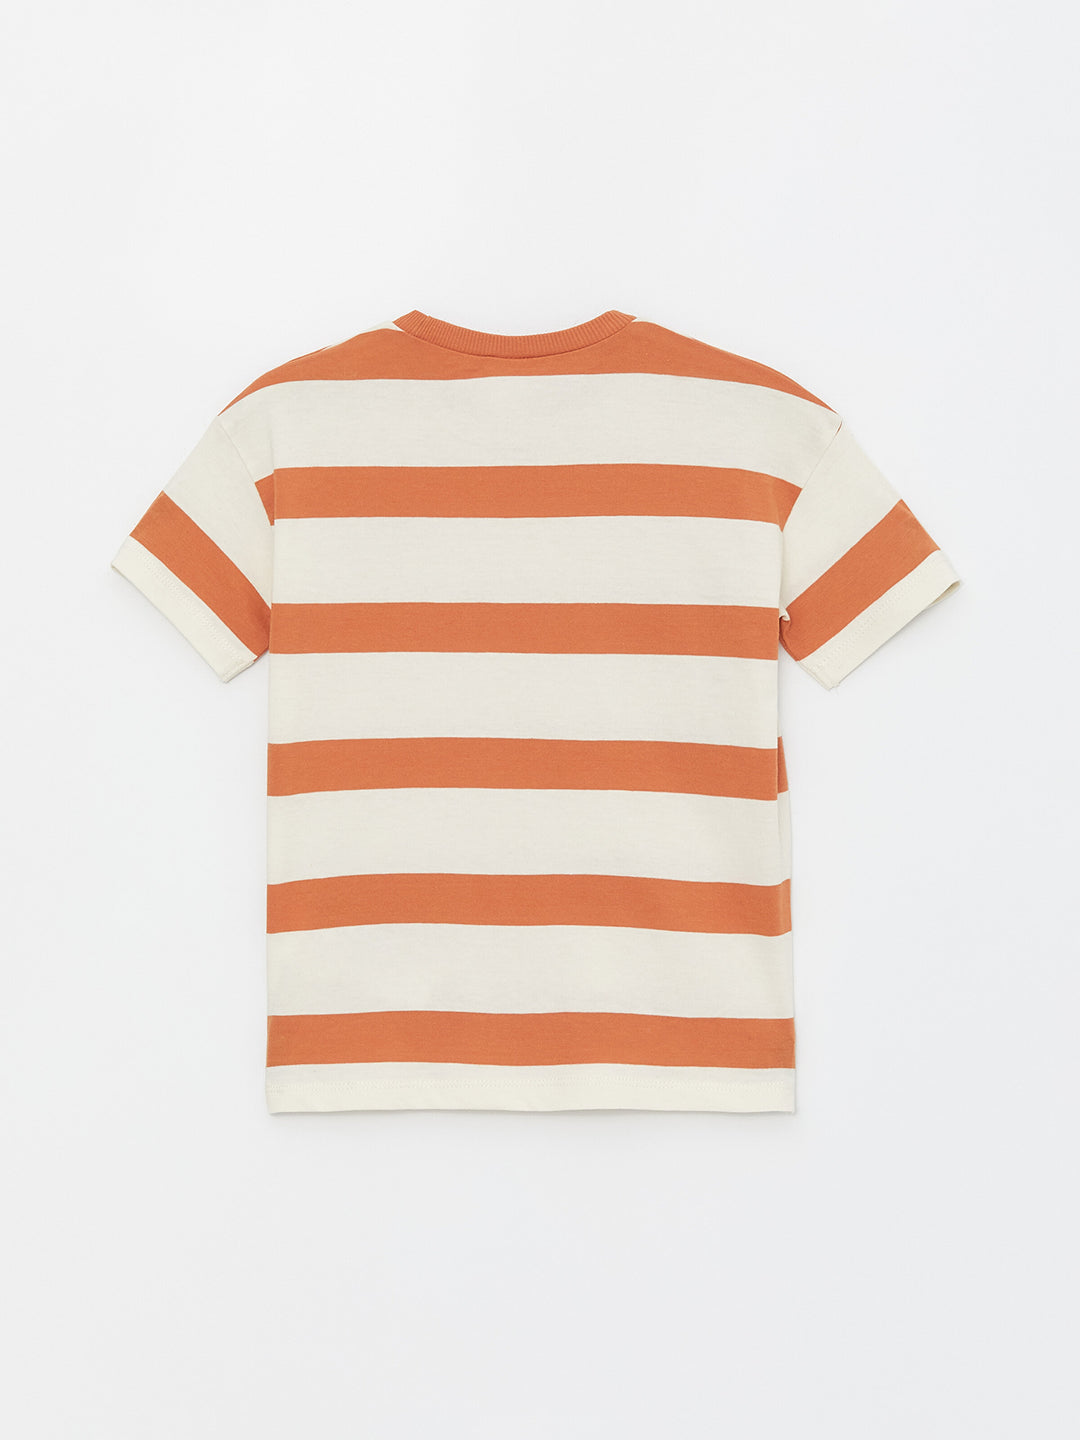 Crew Neck Short Sleeve Striped Baby Boy T-Shirt